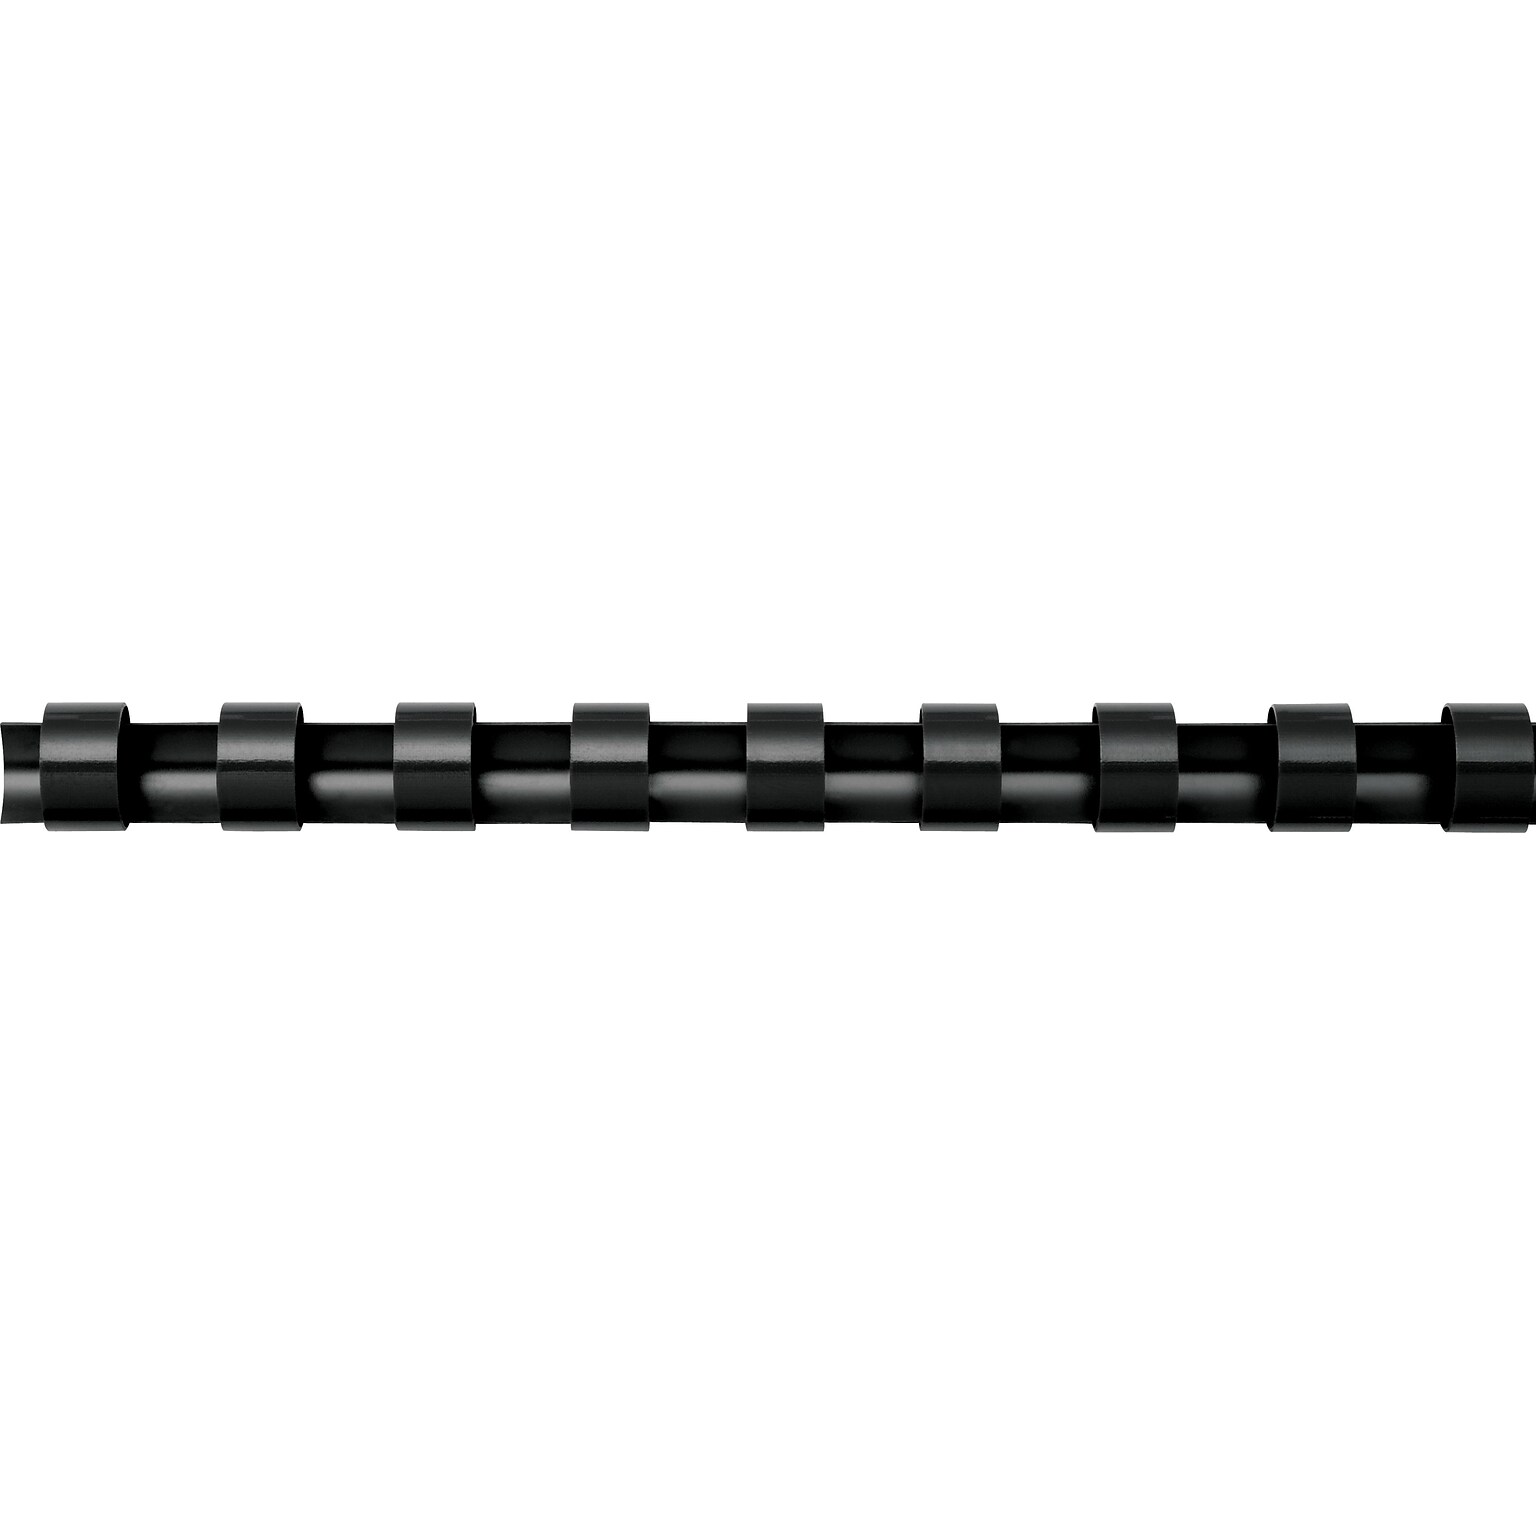 Fellowes 3/8 Plastic Binding Spine Comb, 55 Sheet Capacity, Black, 25/Pack (52322)